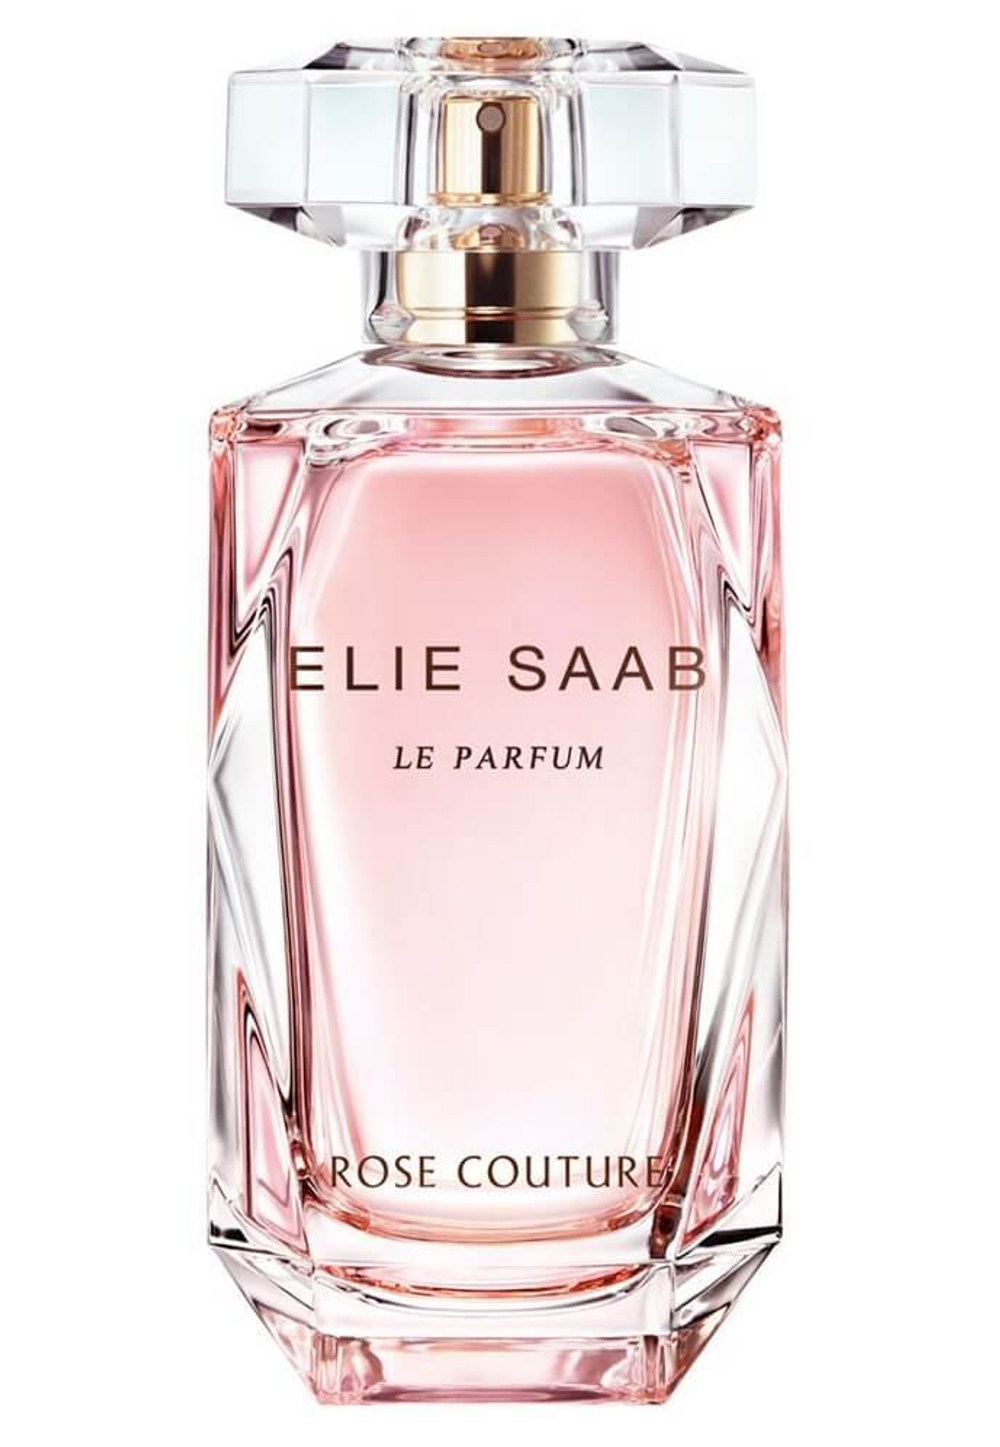 Elie Saab Rose Couture